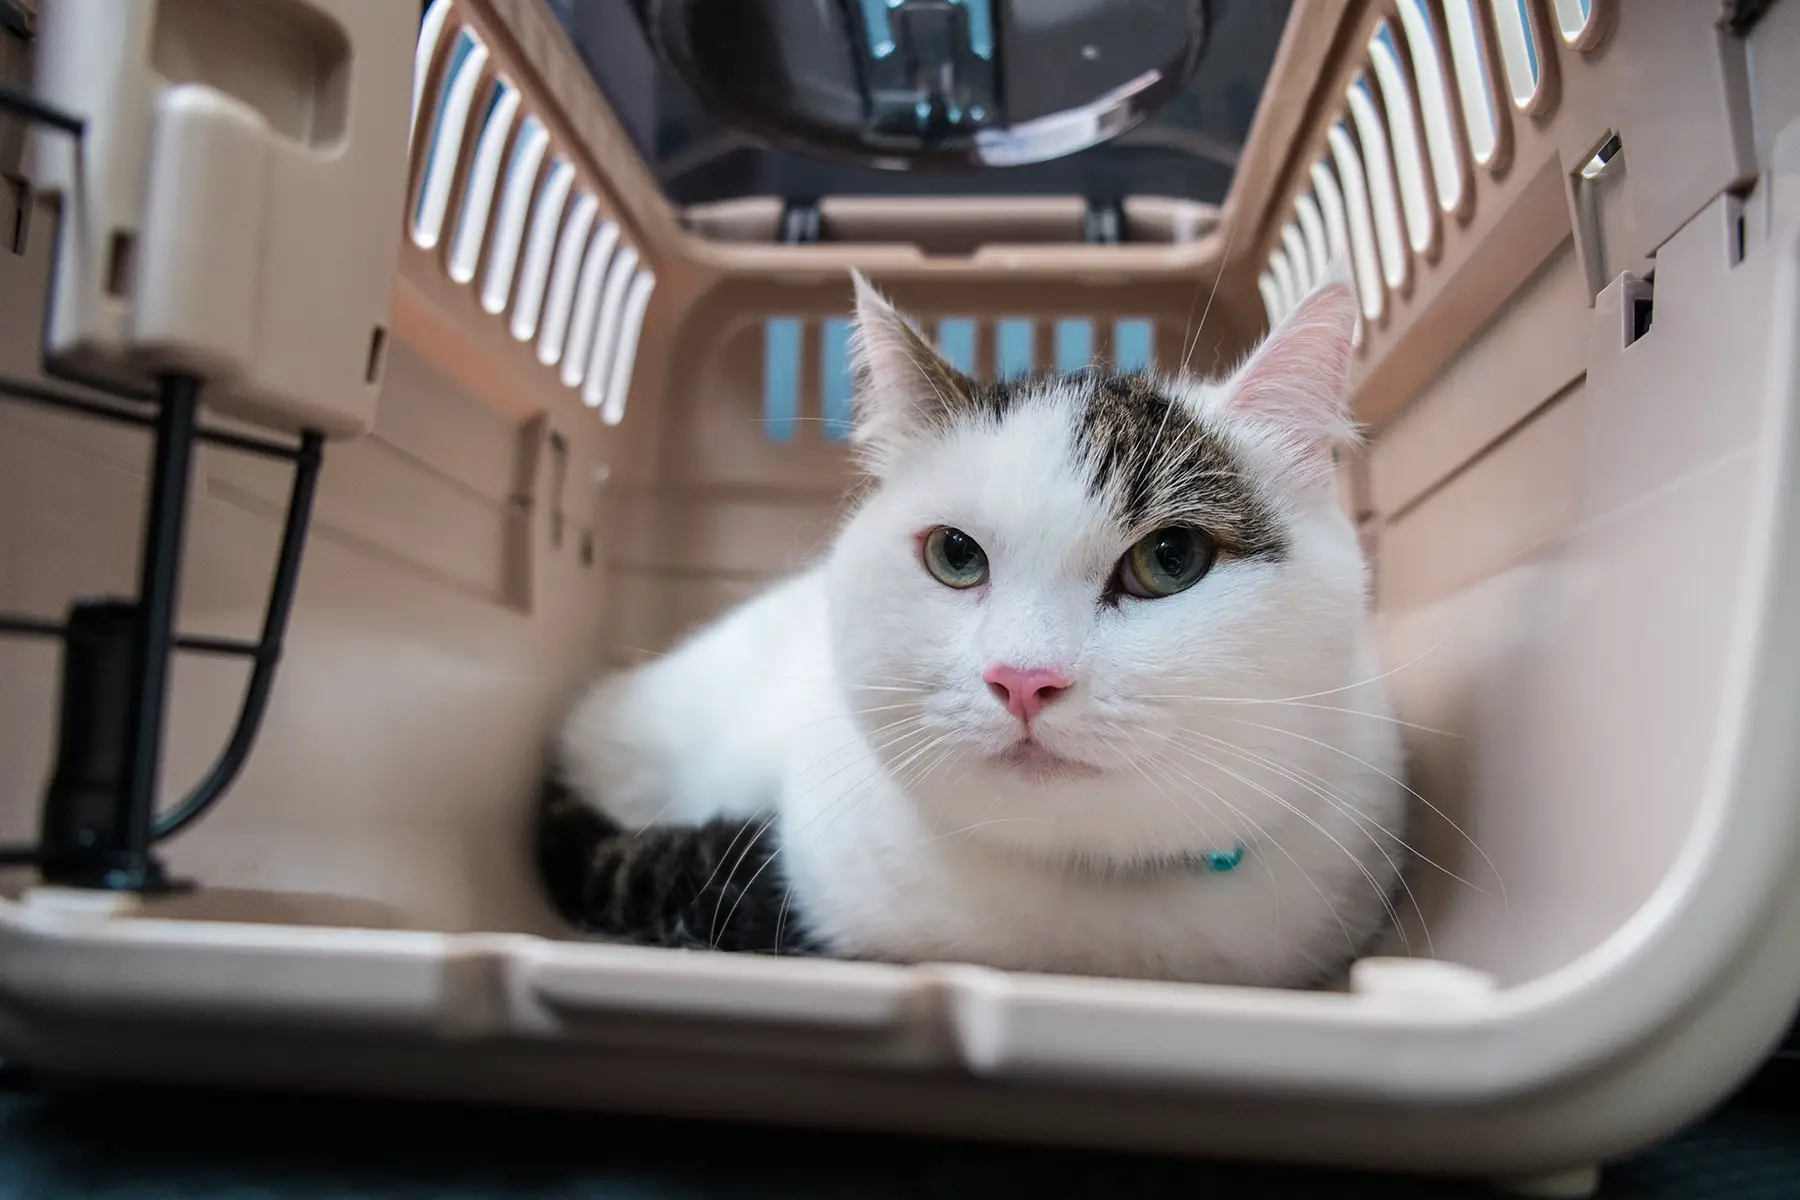 A cat in a pet carrier